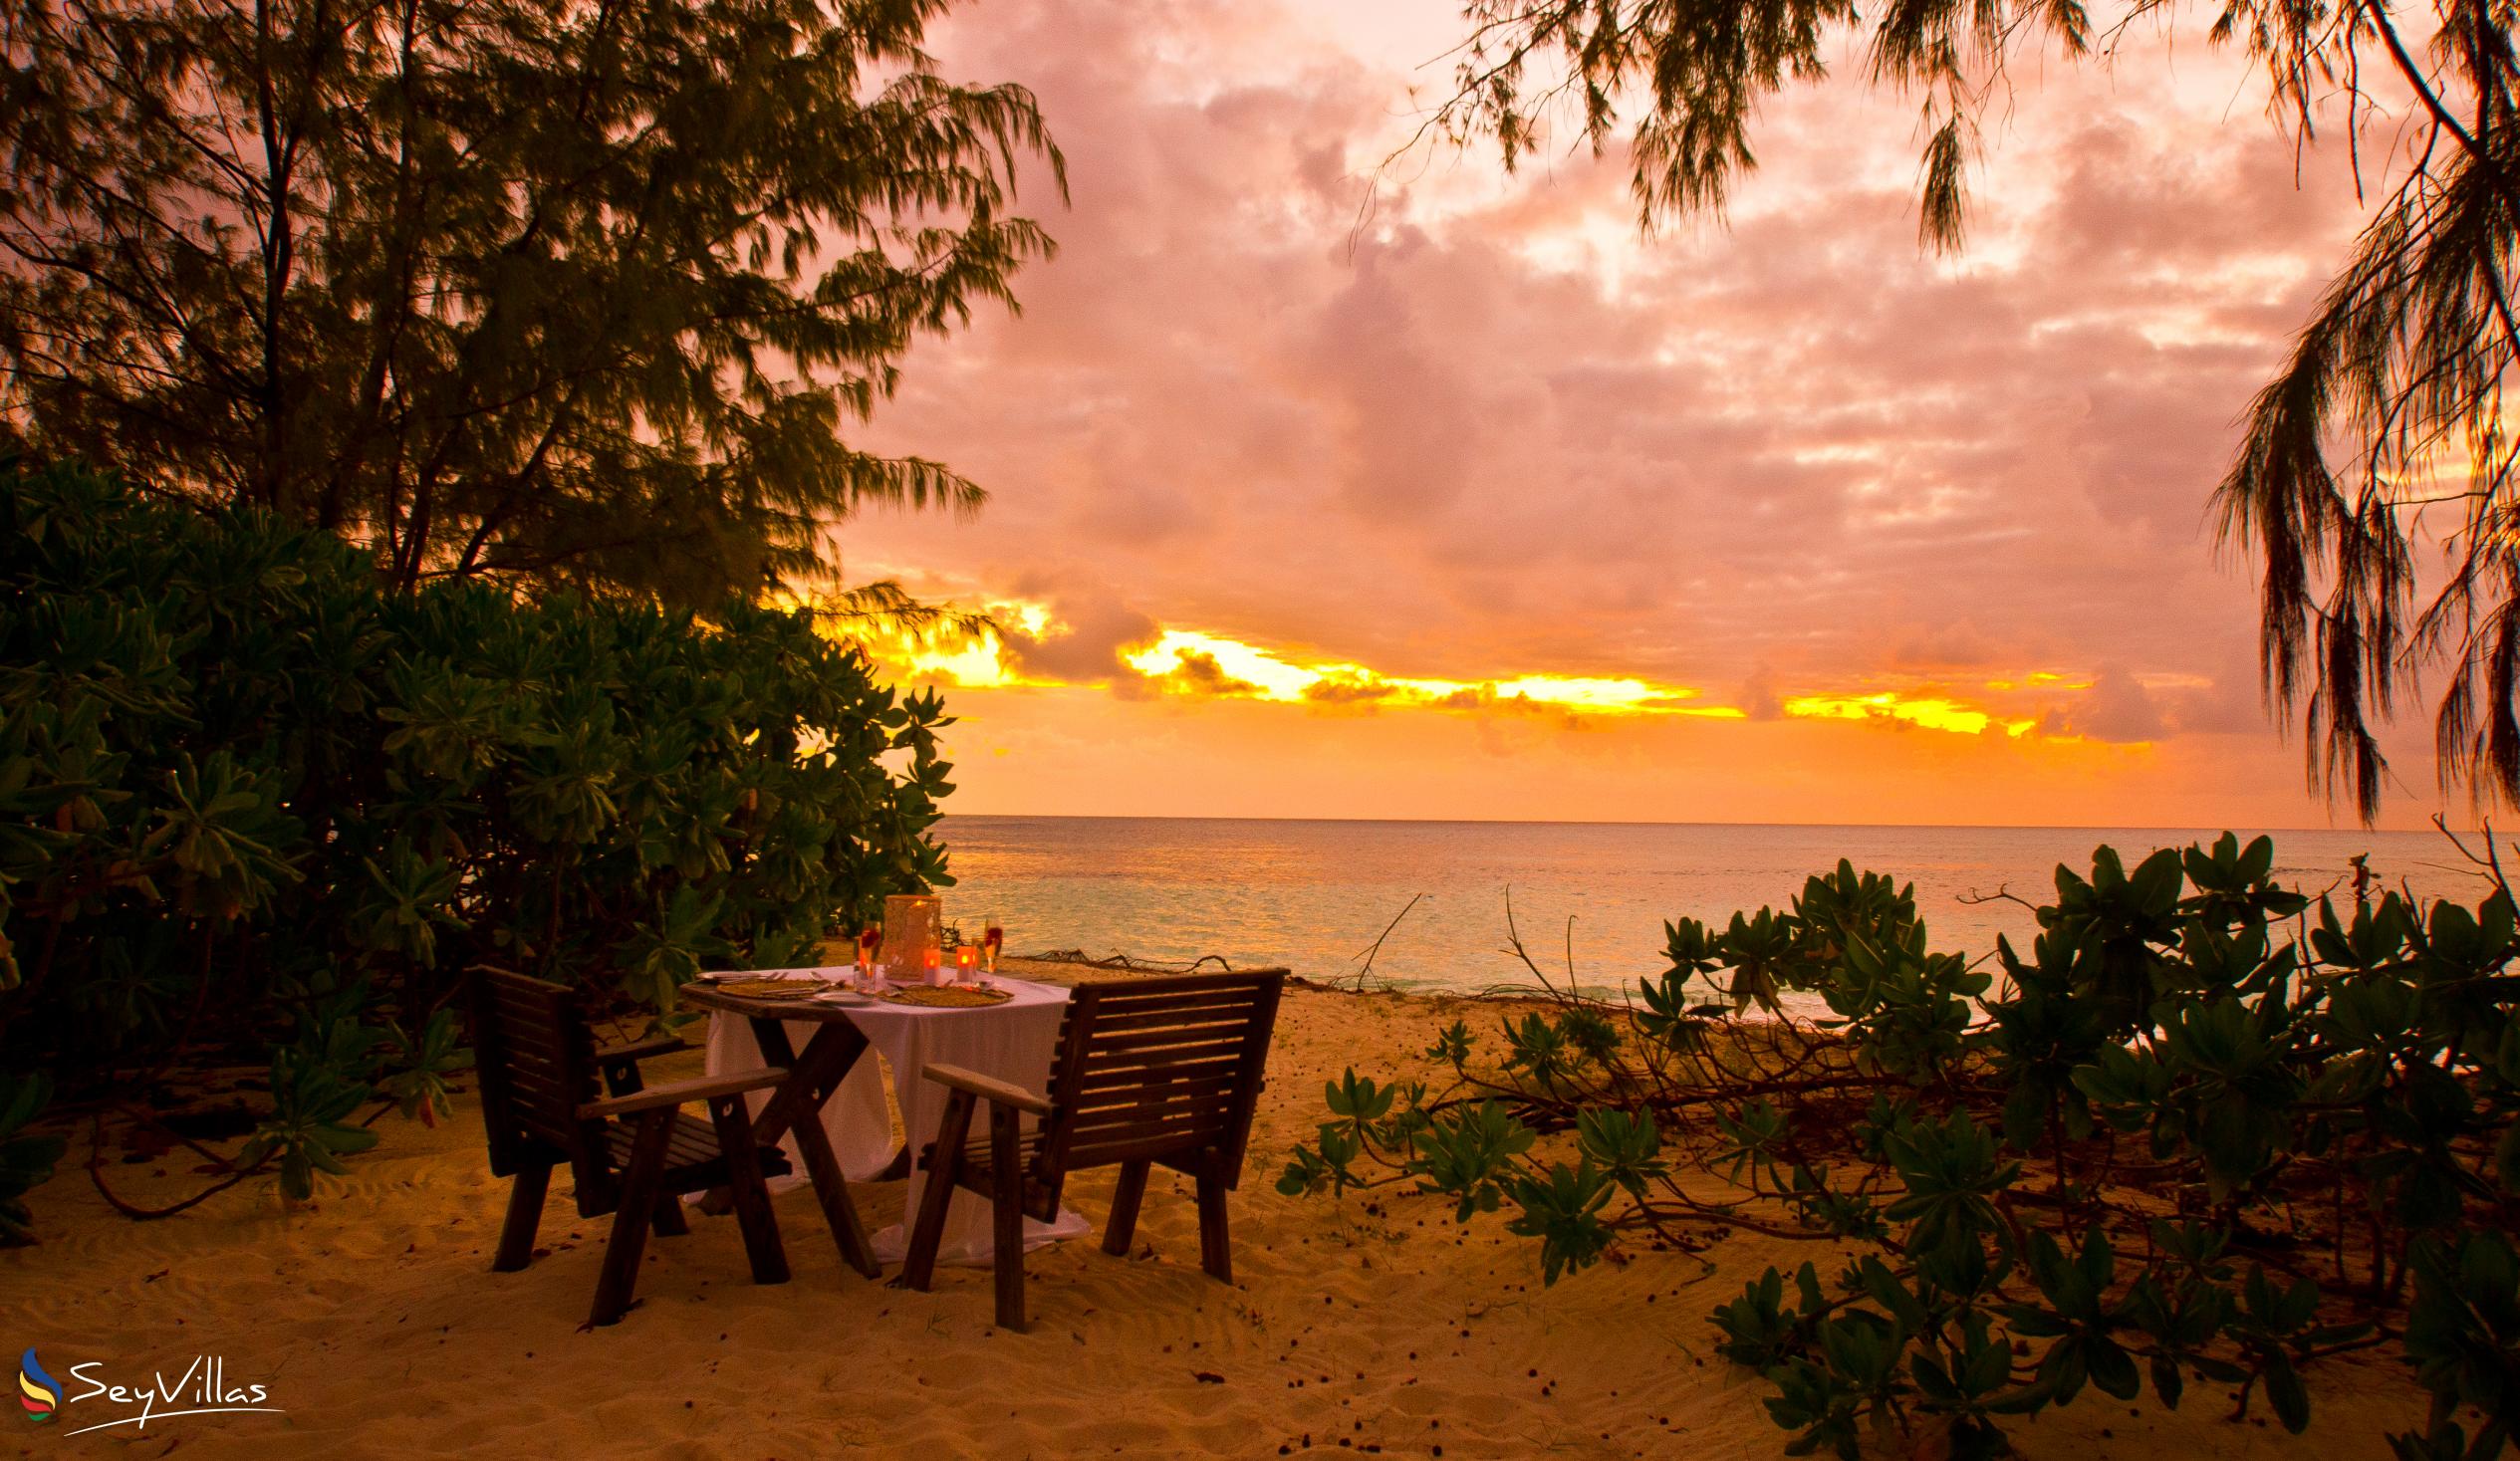 Photo 28: Denis Private Island - Outdoor area - Denis Island (Seychelles)